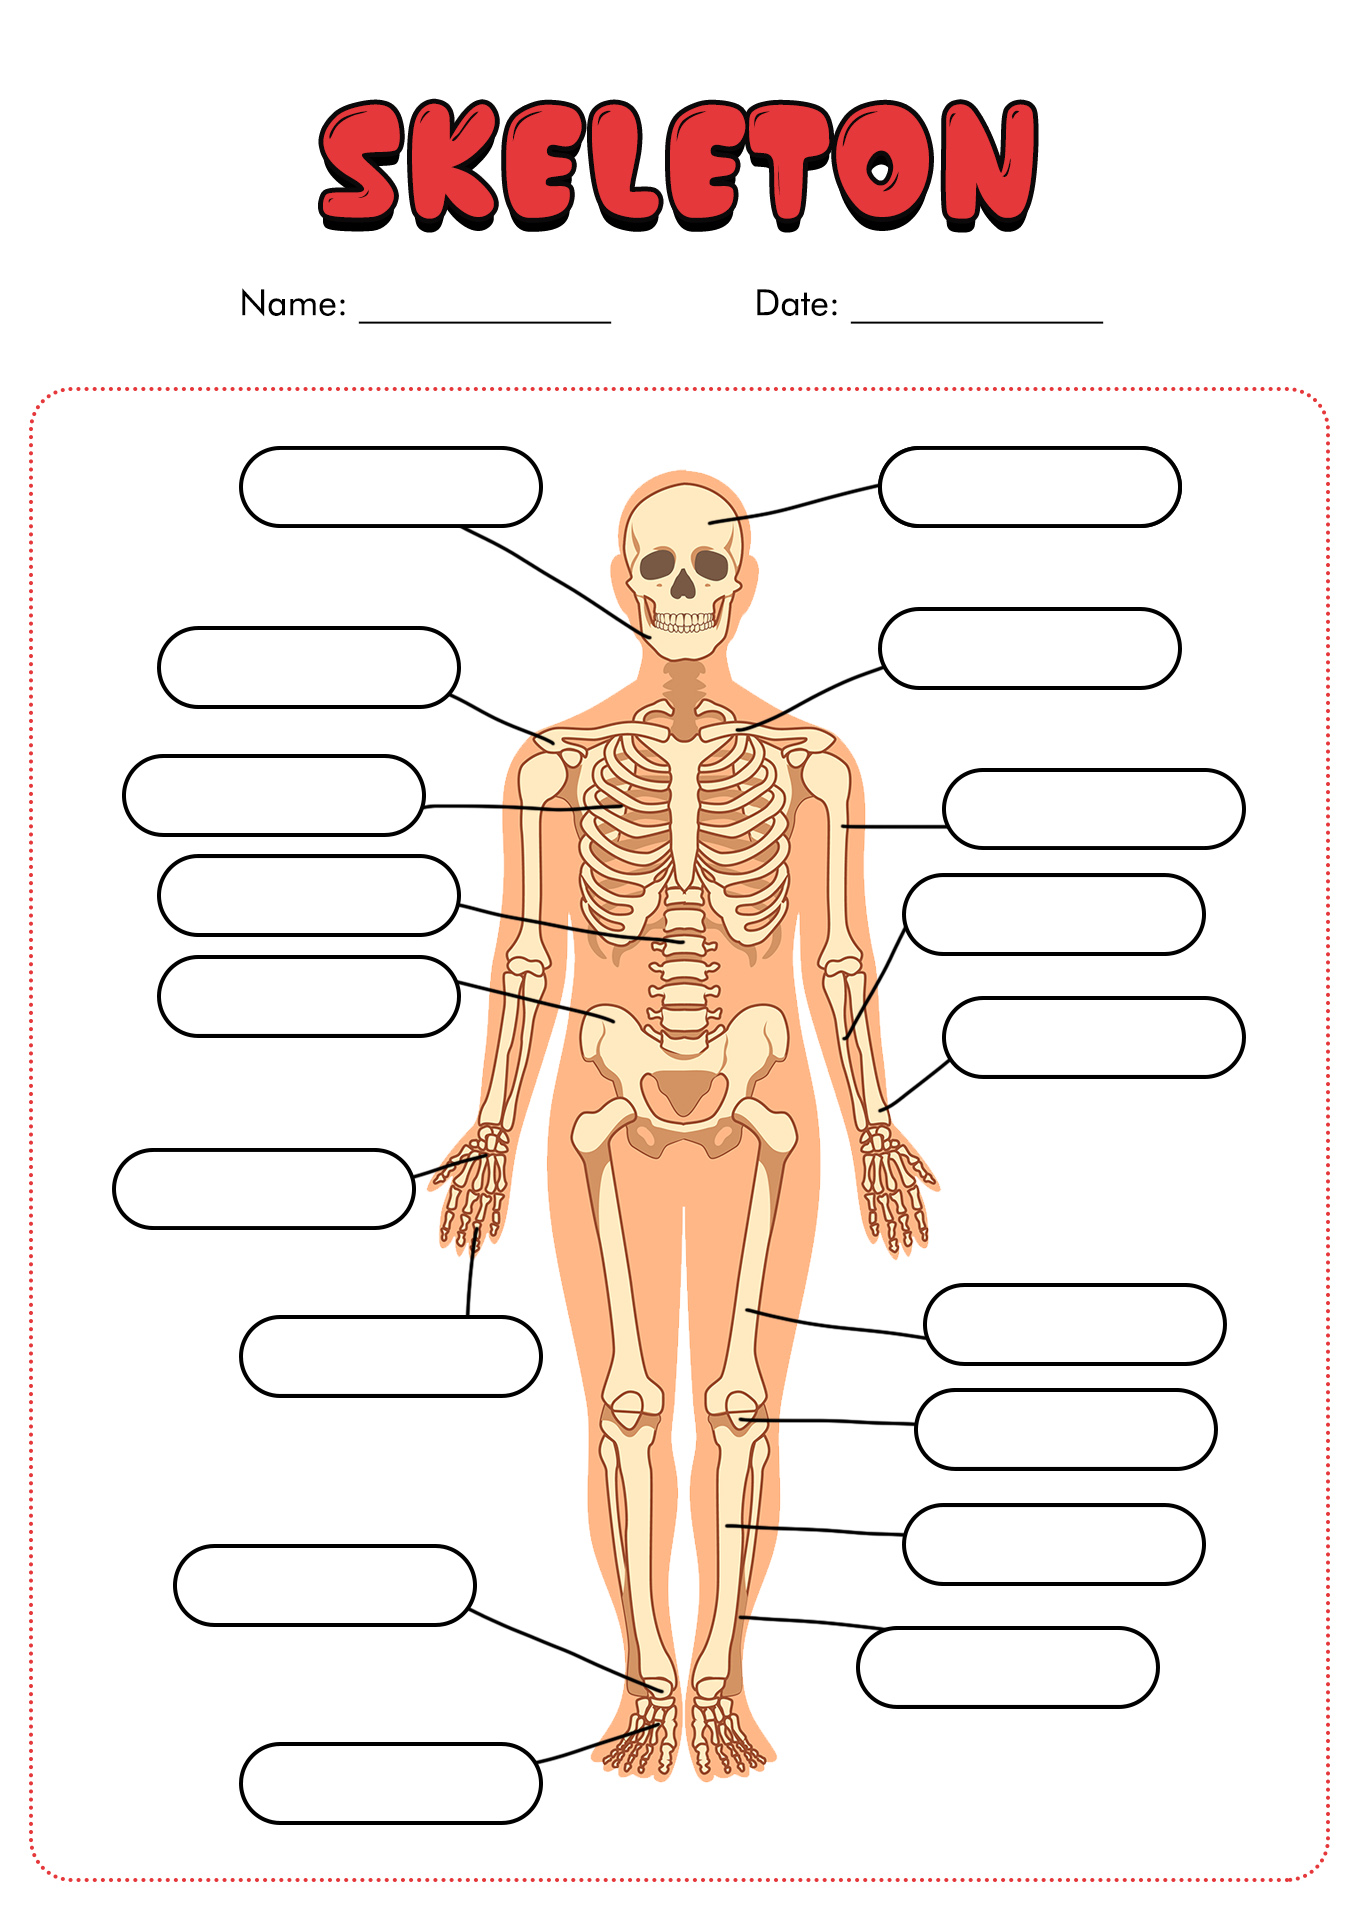 12 Blank Anatomy Worksheets Worksheeto